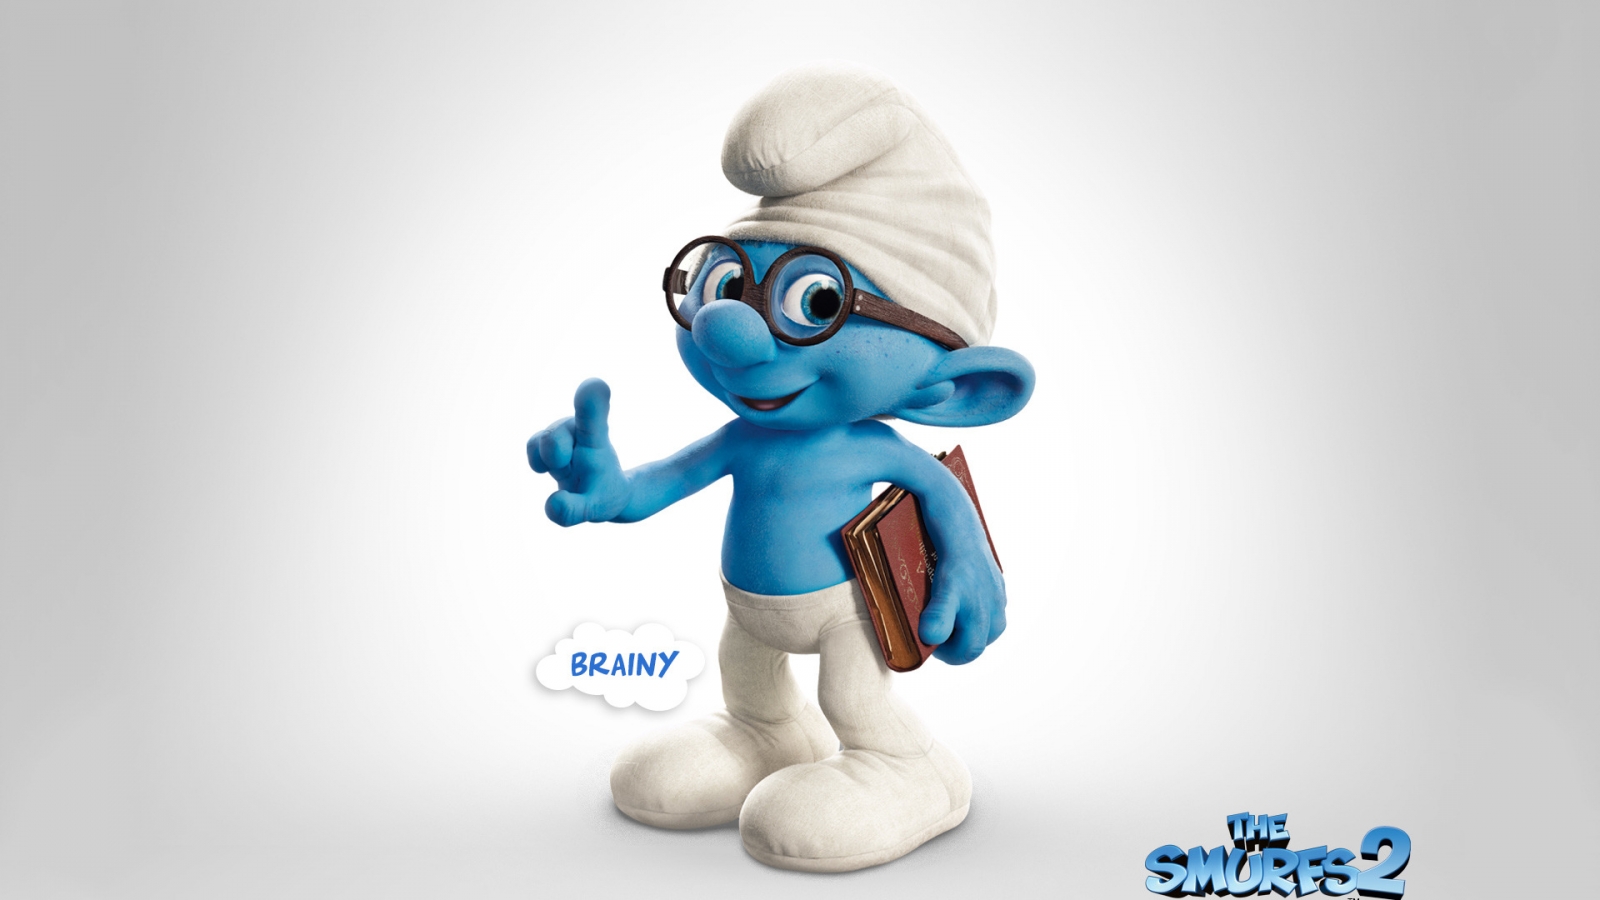 Brainy The Smurfs 2 for 1600 x 900 HDTV resolution